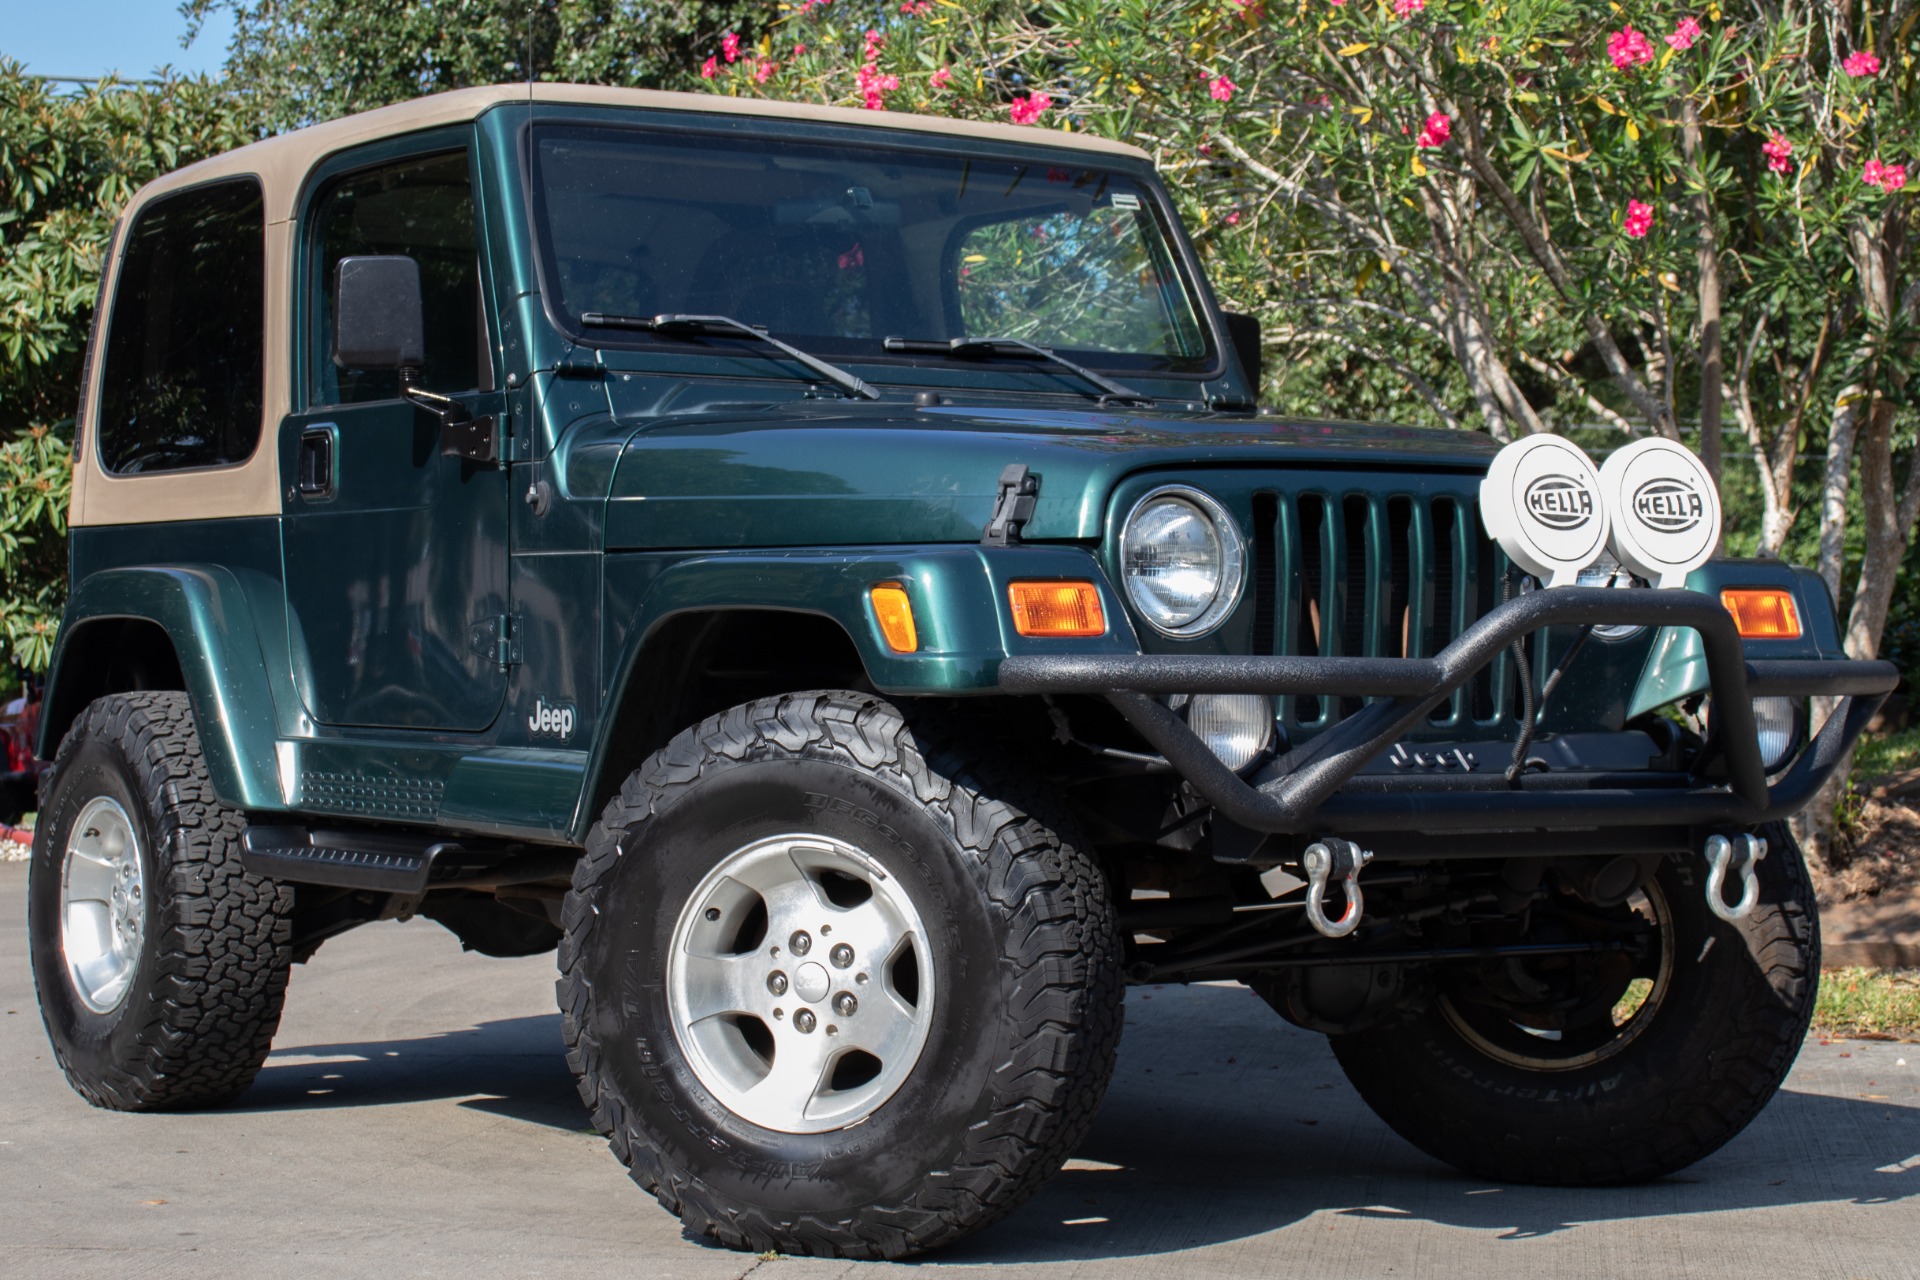 Used 2000 Jeep Wrangler Sahara For Sale ($16,995) | Select Jeeps Inc. Stock  #728360